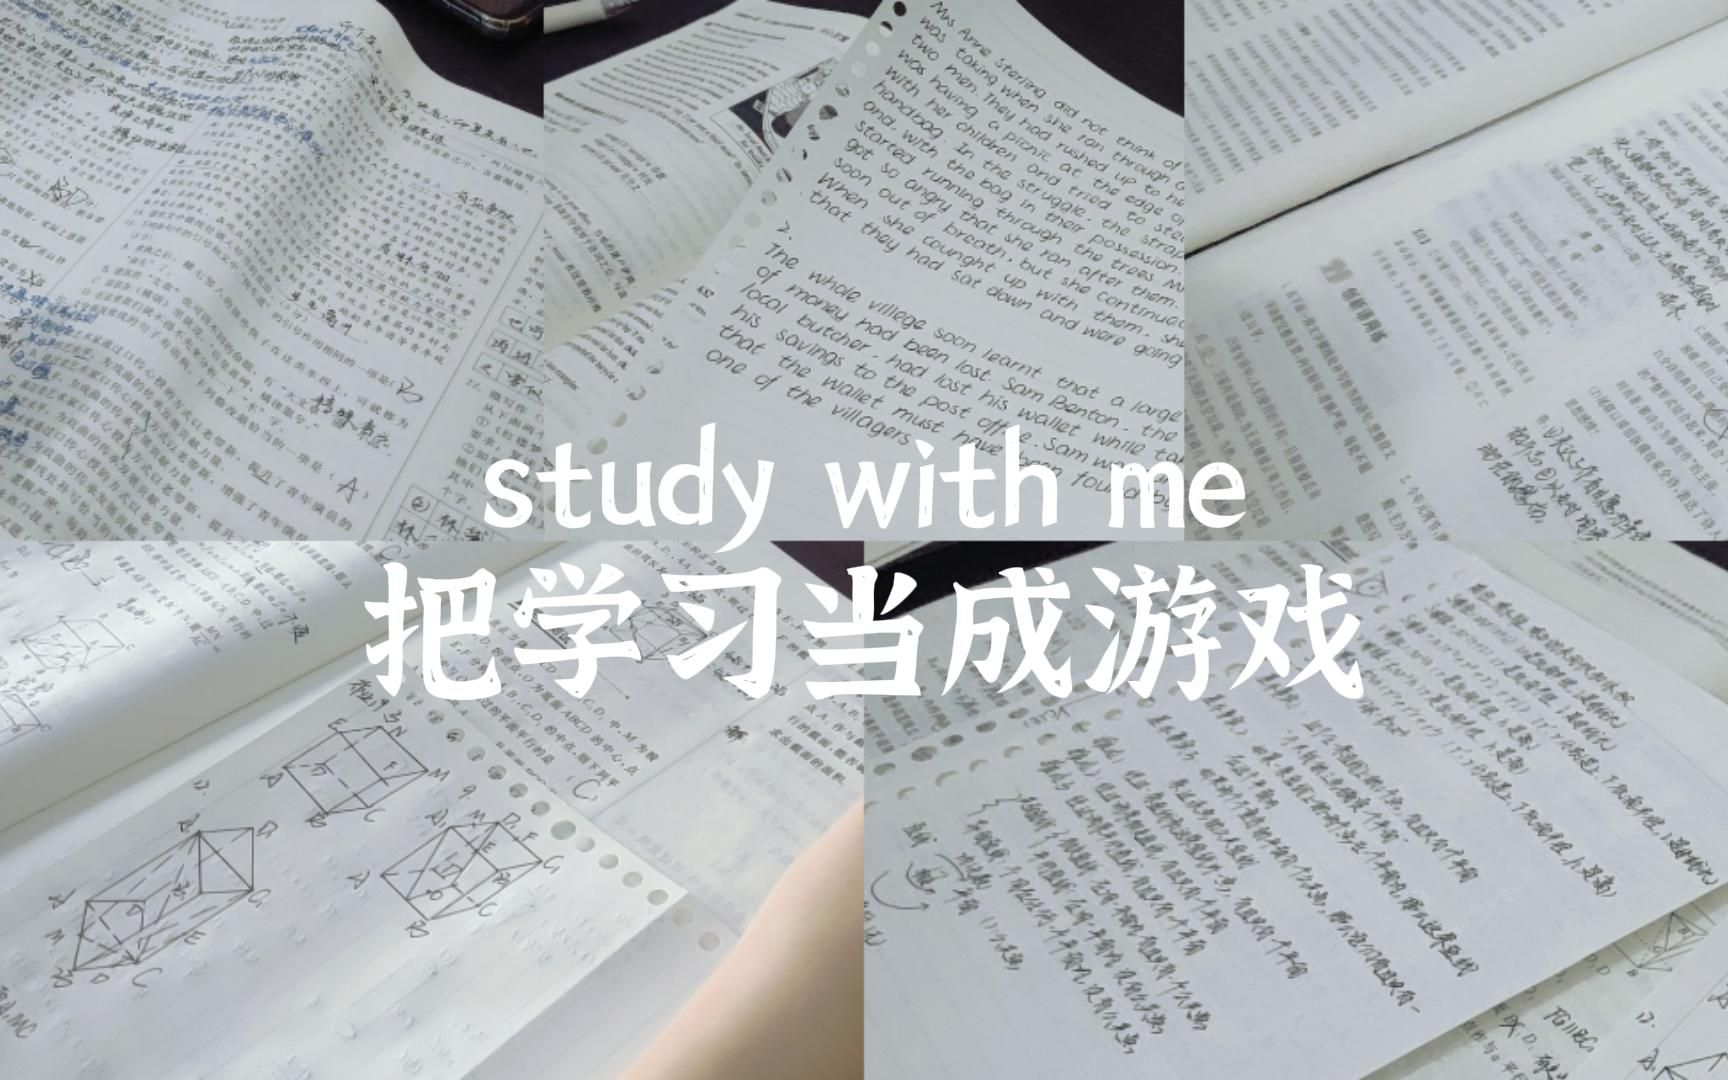 study with me|凌晨2:30学习|没什么事，学个习吧